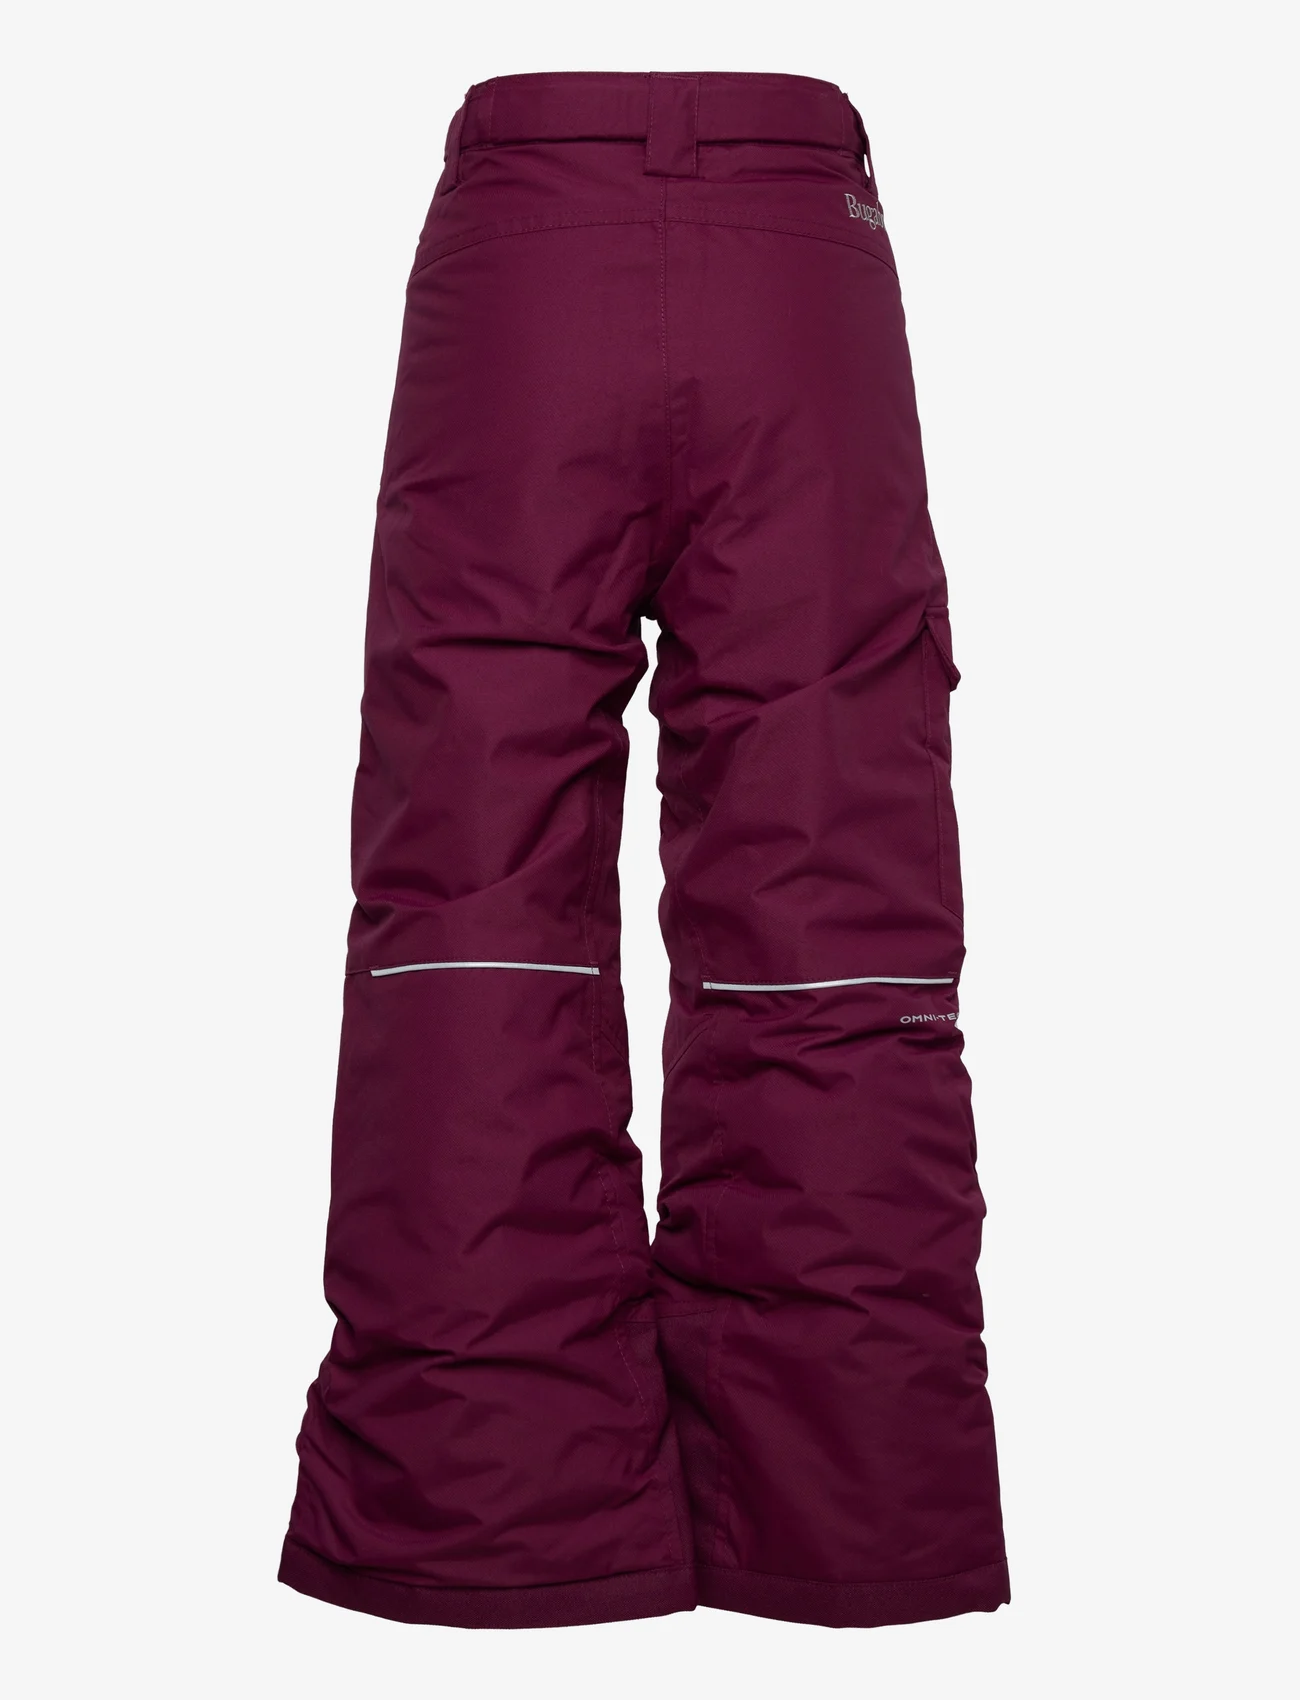 Columbia Sportswear - Bugaboo II Pant - skihosen - marionberry - 1